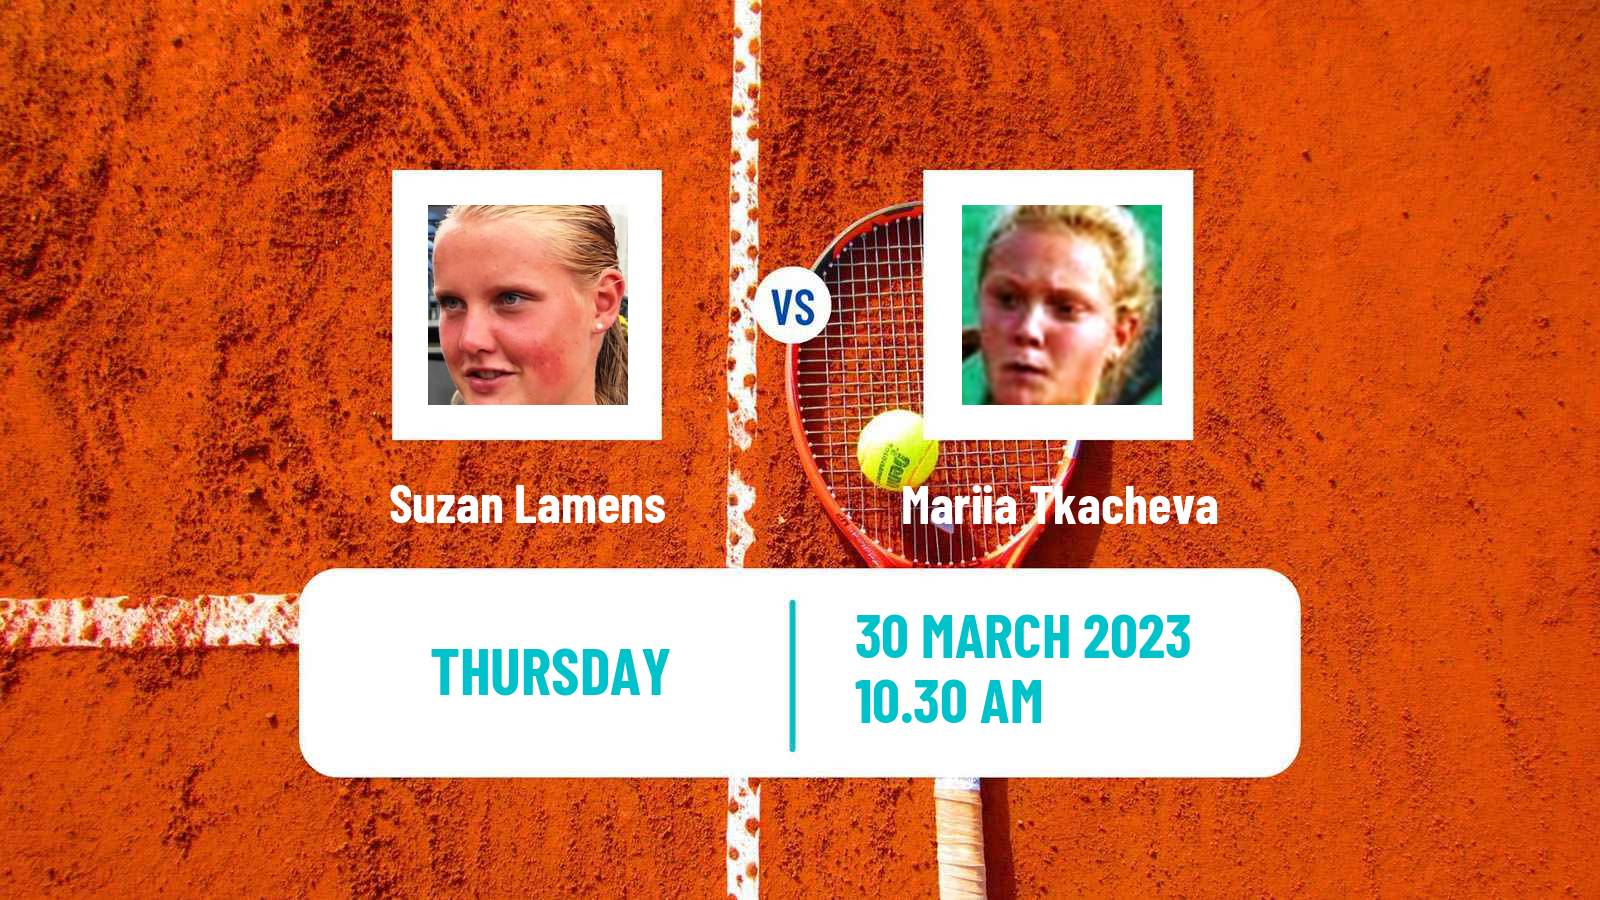 Tennis ITF Tournaments Suzan Lamens - Mariia Tkacheva